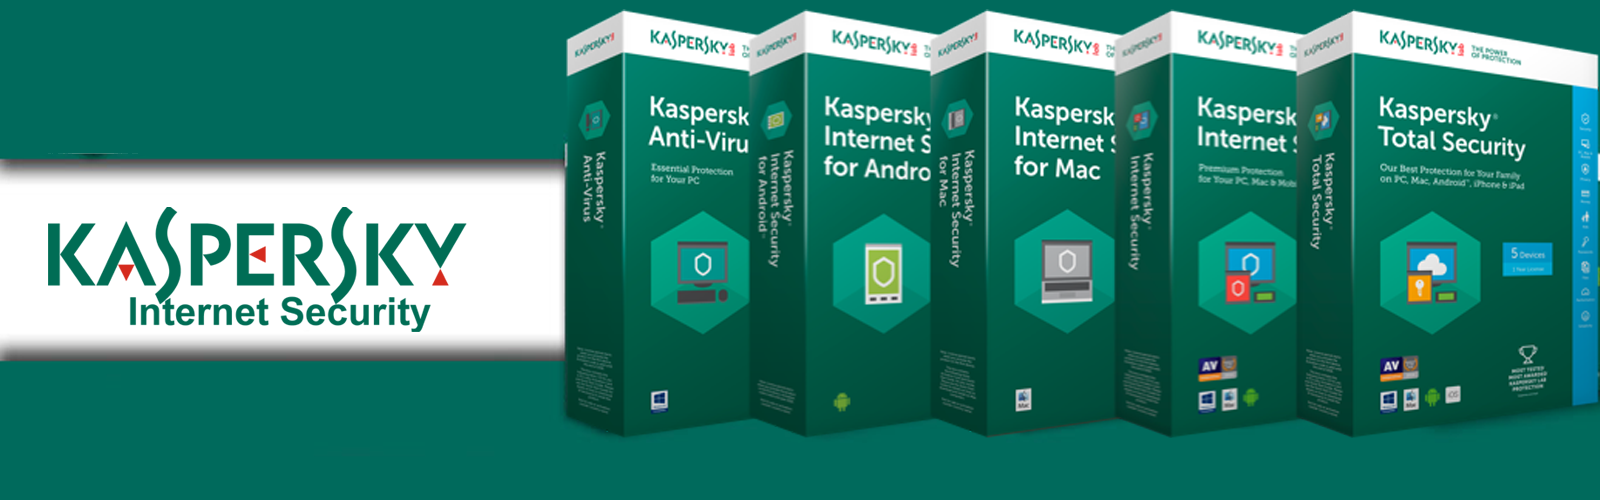 antivirus software kaspersky download